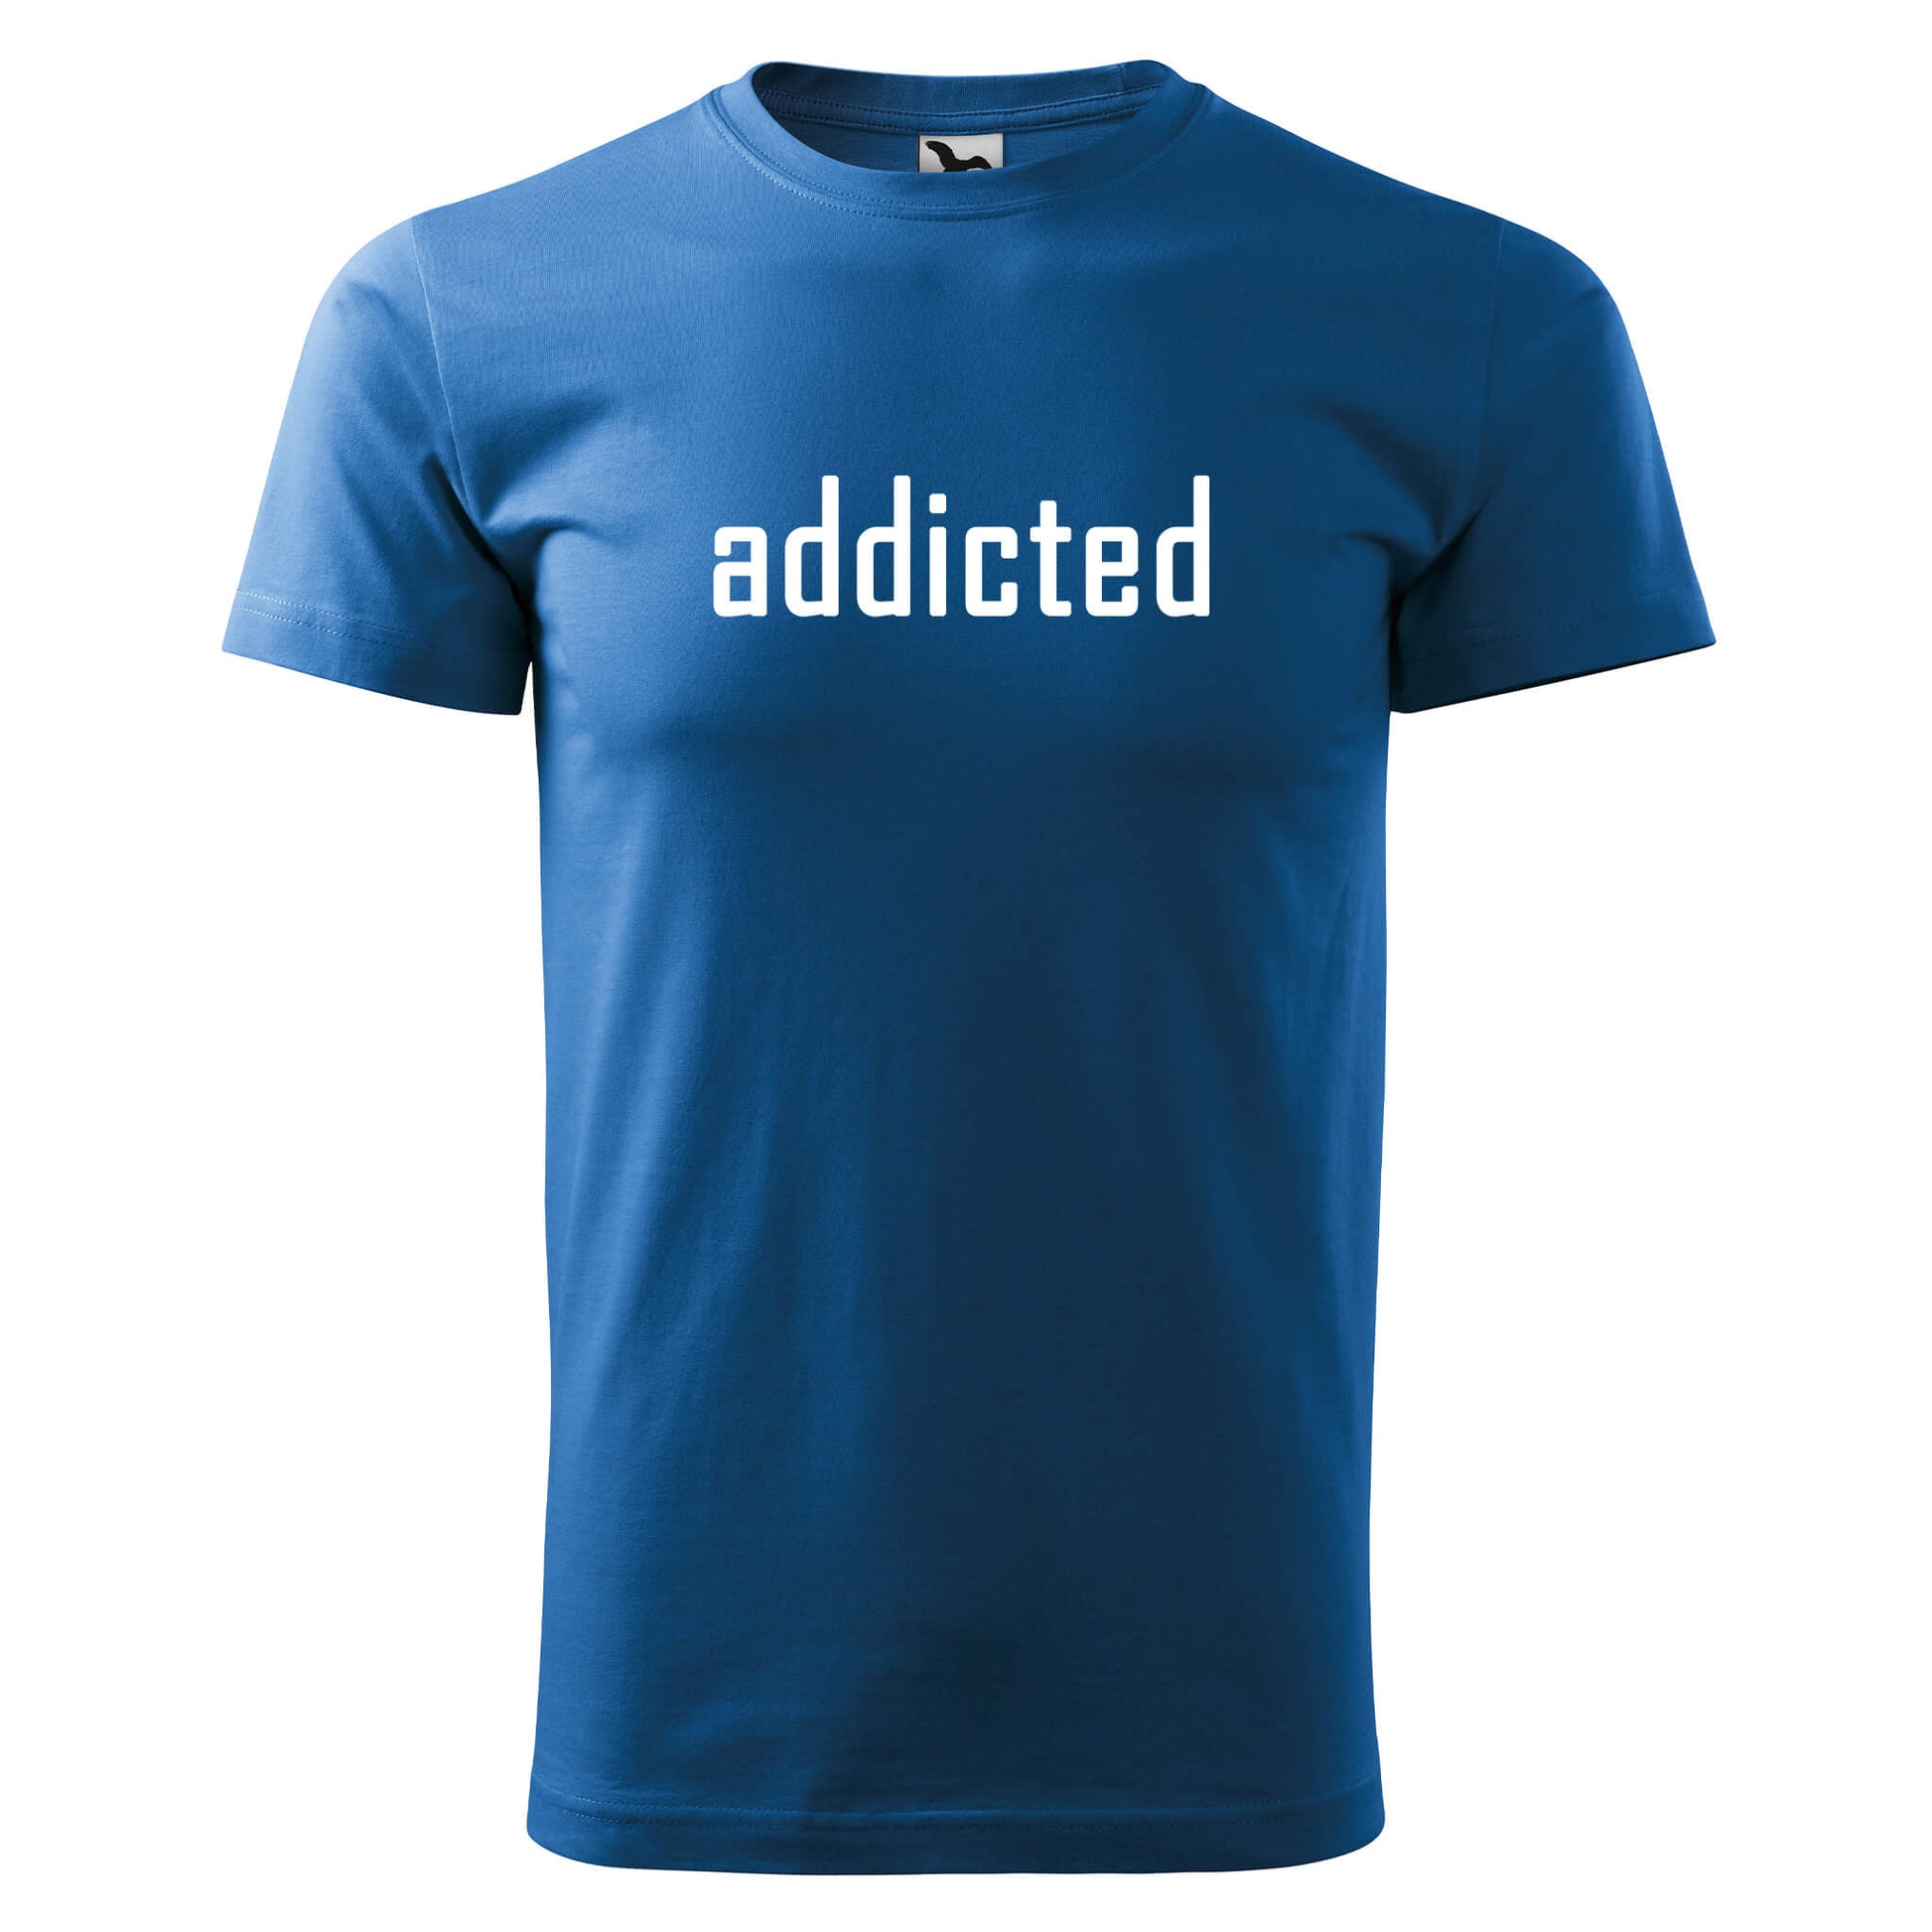 T-shirt - addicted - rvdesignprint